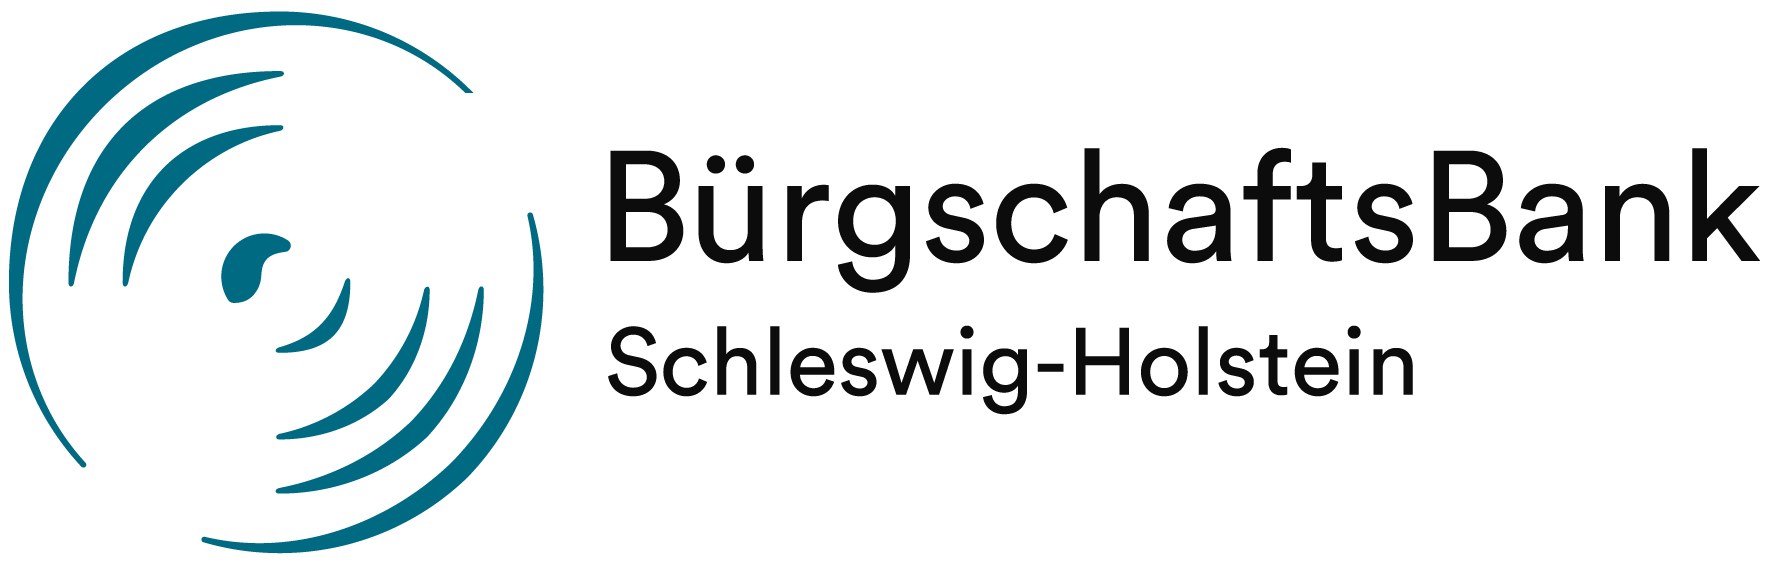 Bürgschaftsbank Schleswig-Holstein GmbH, Kiel Logo